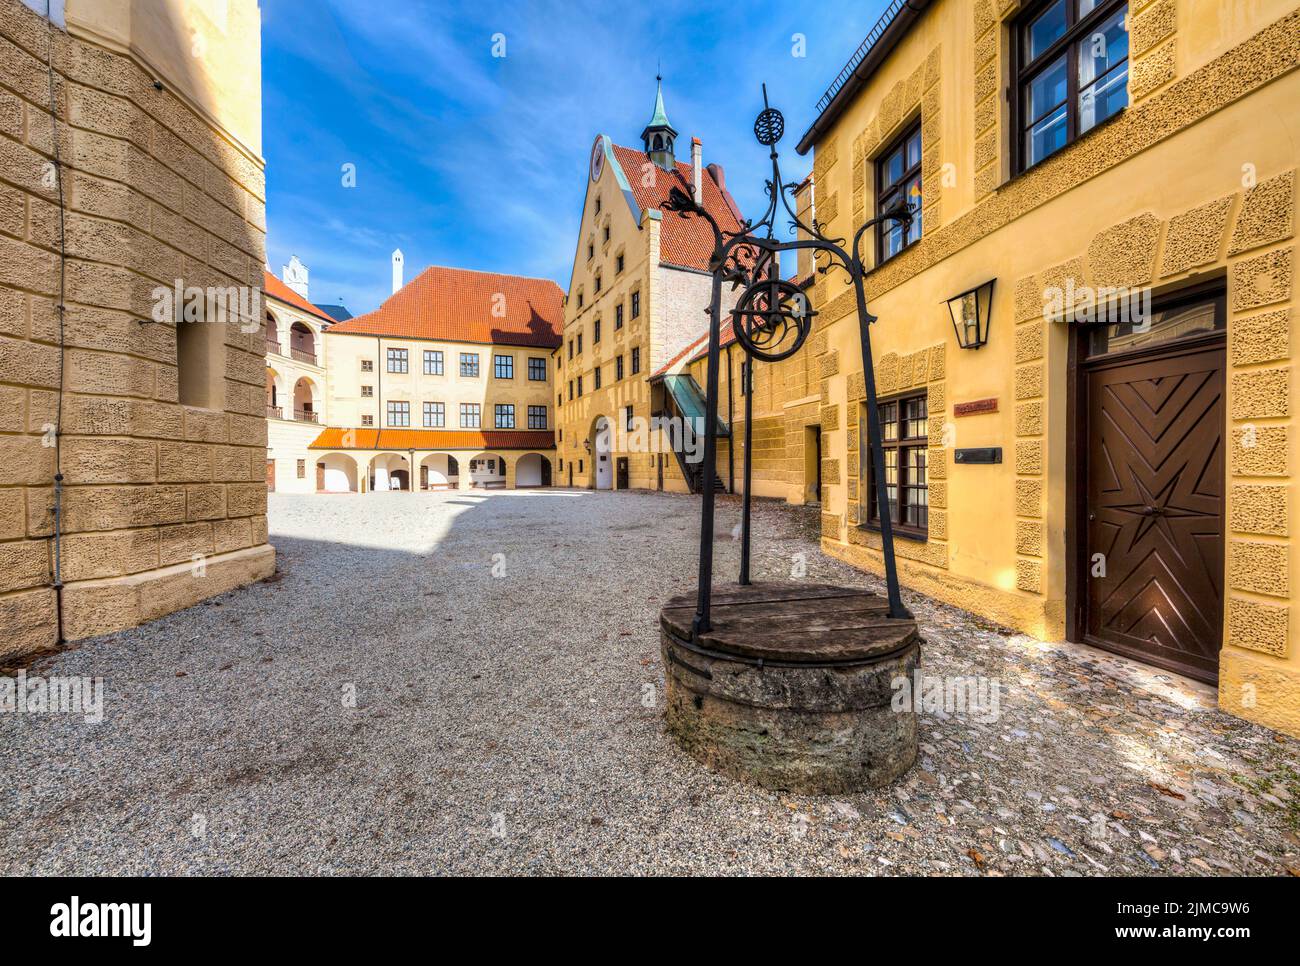 Castle Trausnitz, Landshut, Lower Bavaria, Bavaria, Germany, Europe Stock Photo